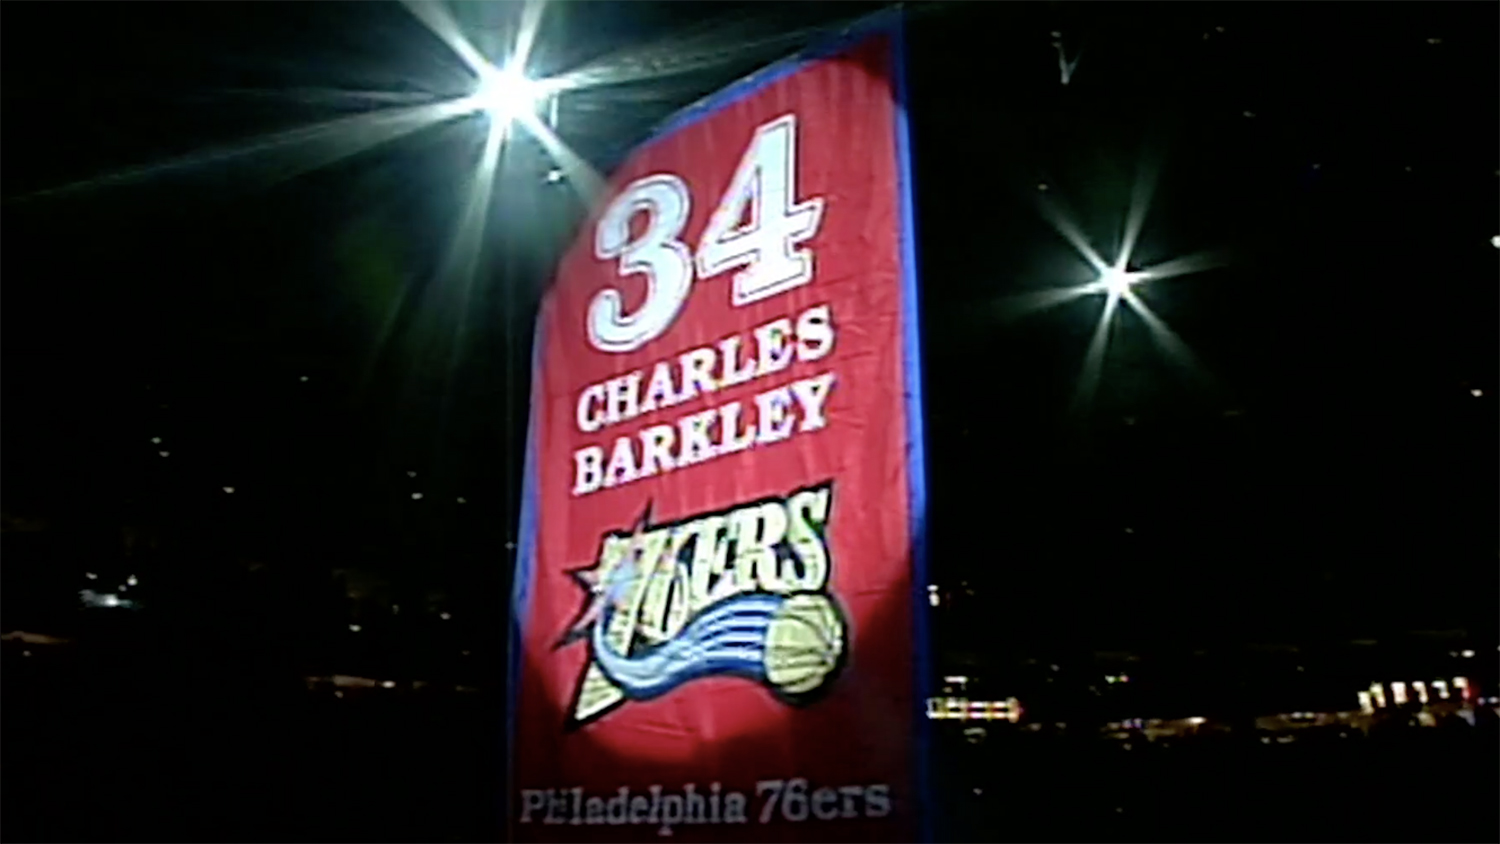 charles barkley 76ers jersey